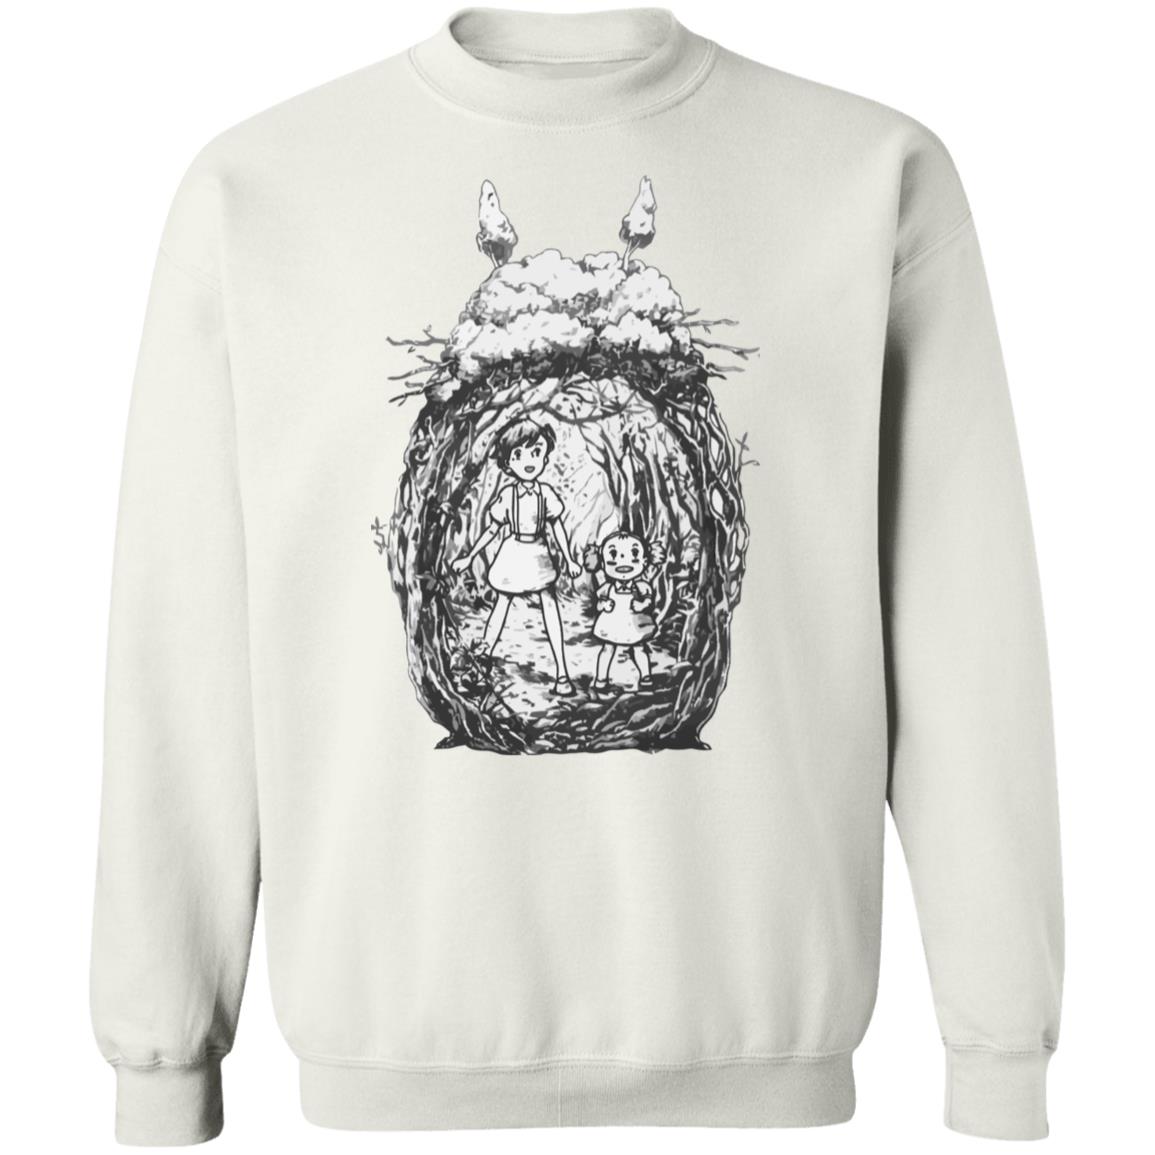 My Neighbor Totoro – Mei and Sastuki in the Forest Sweatshirt